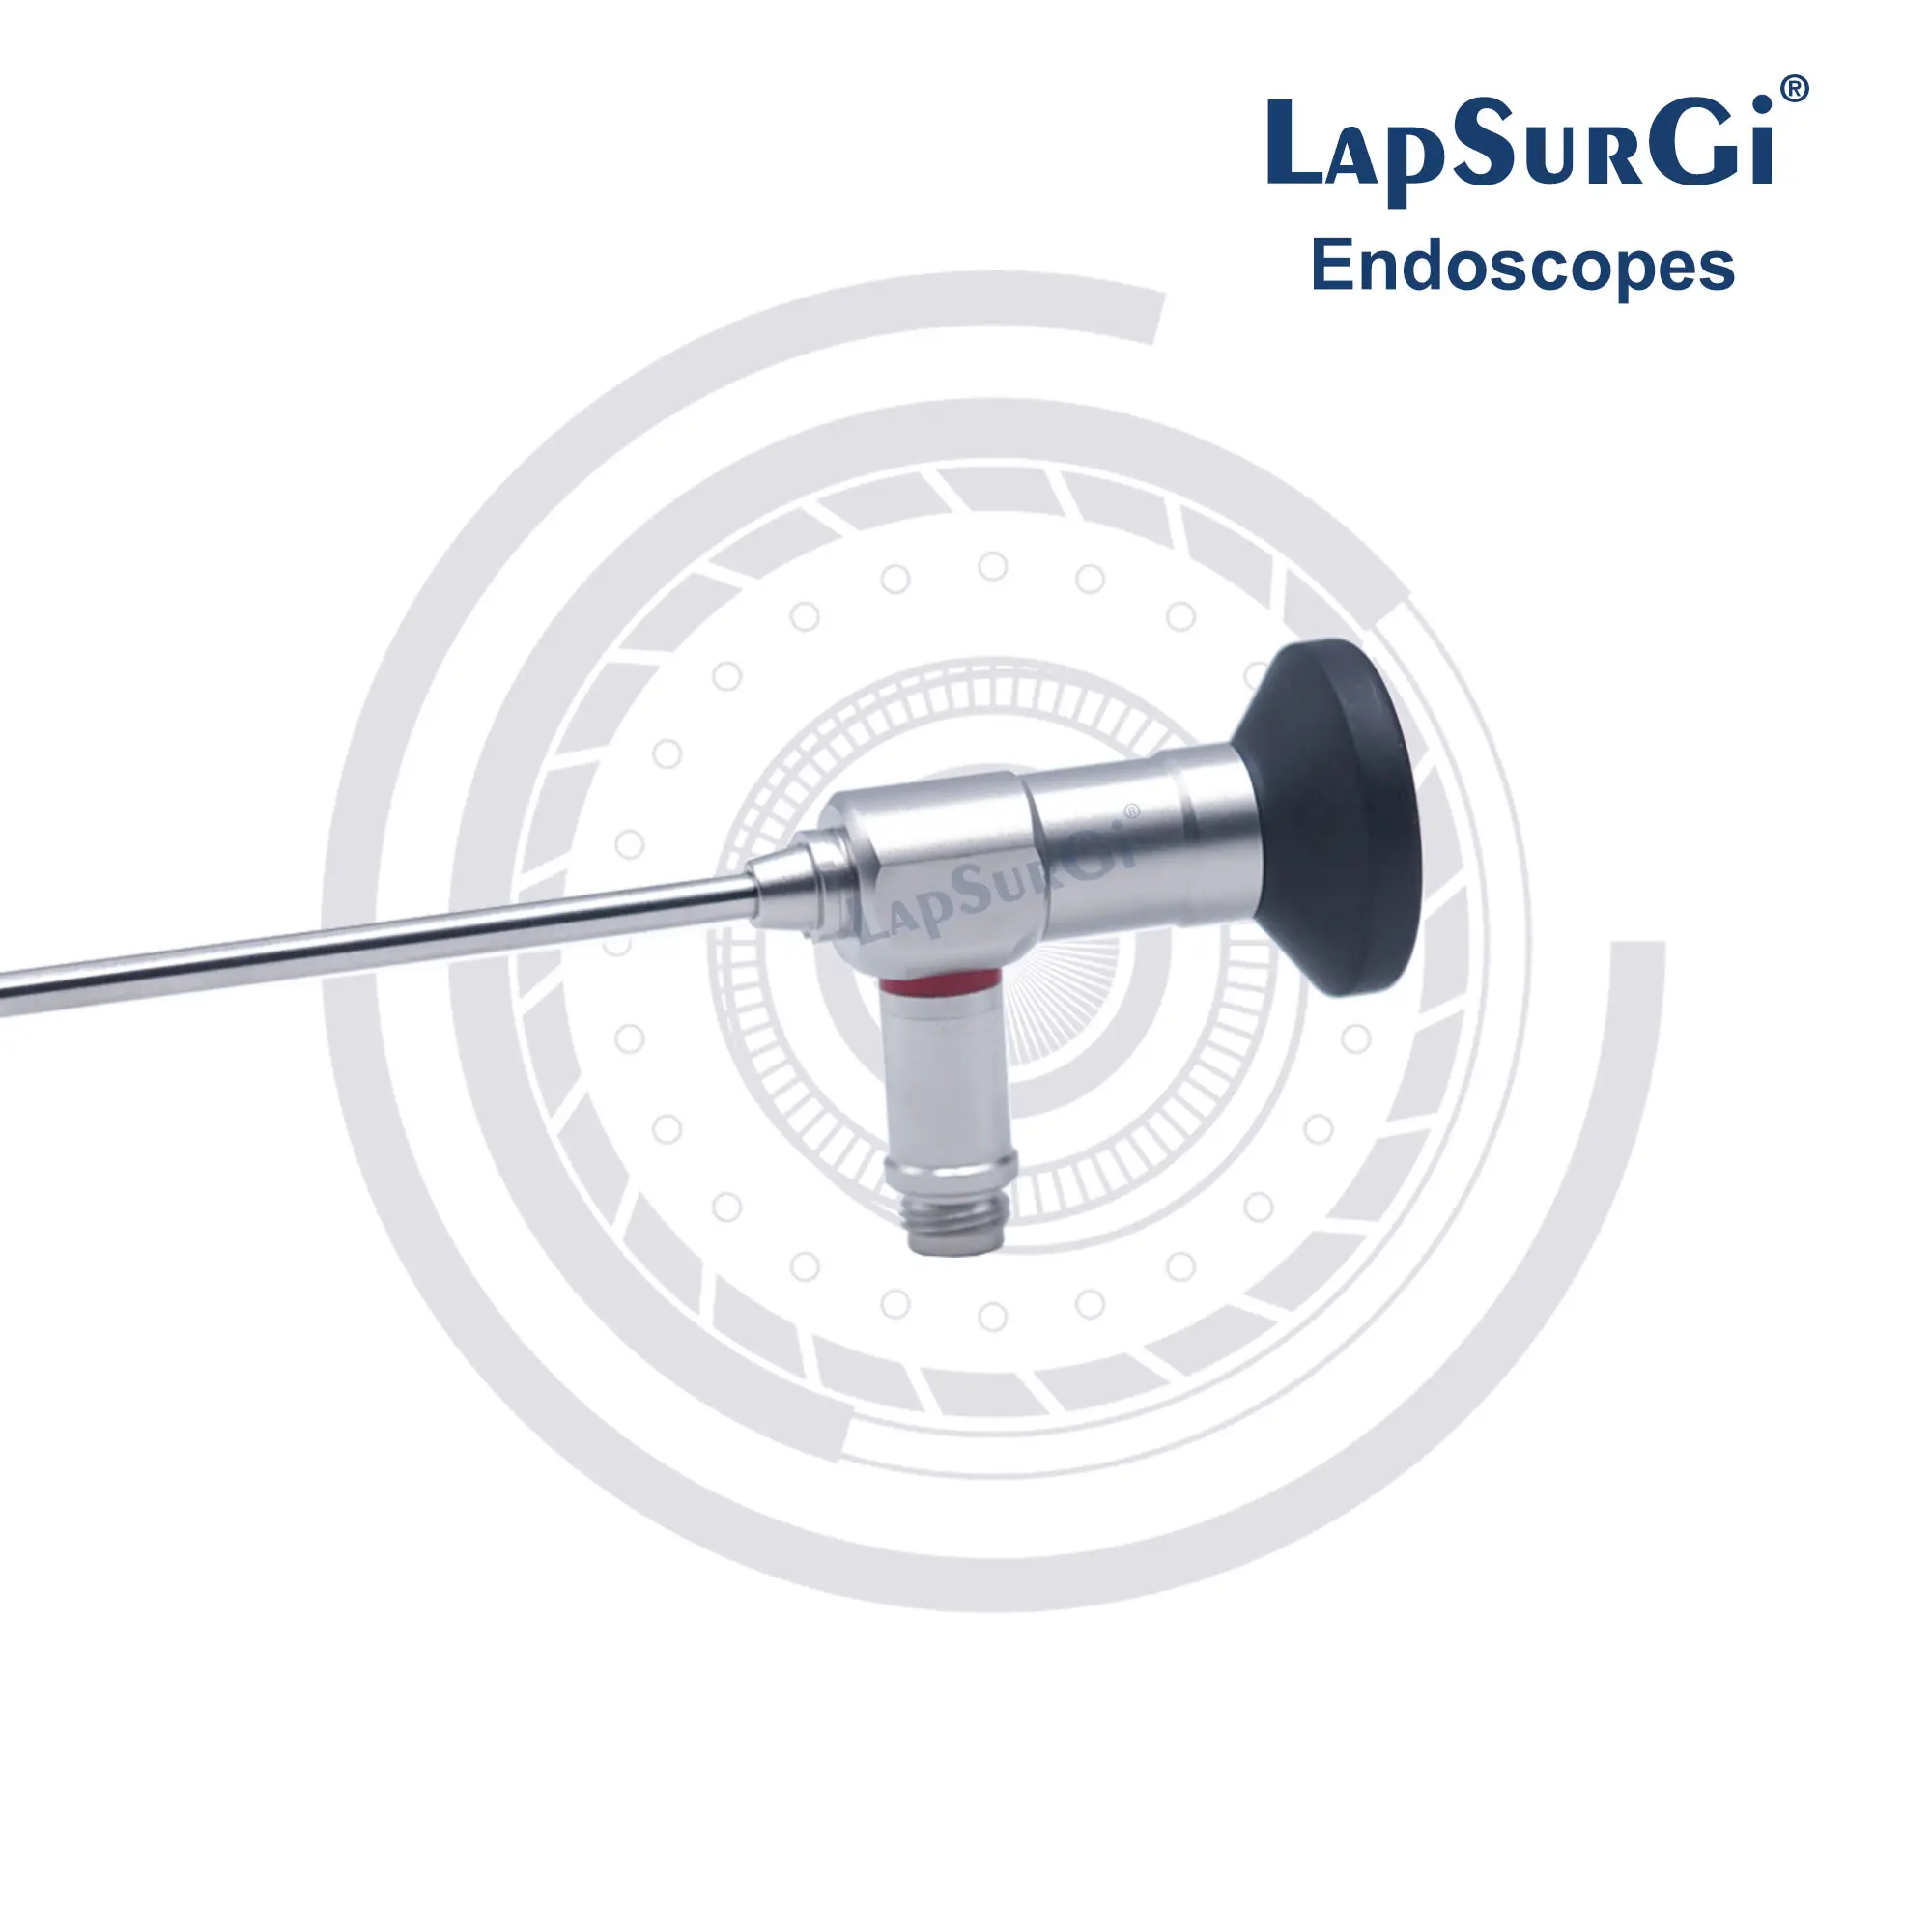 HD otoklavlanabilir 30 derece sert sistoskop 0 derece üroloji endoskopi endoskop hysteroscope set fiyat 2.9mm 4mm 302mm